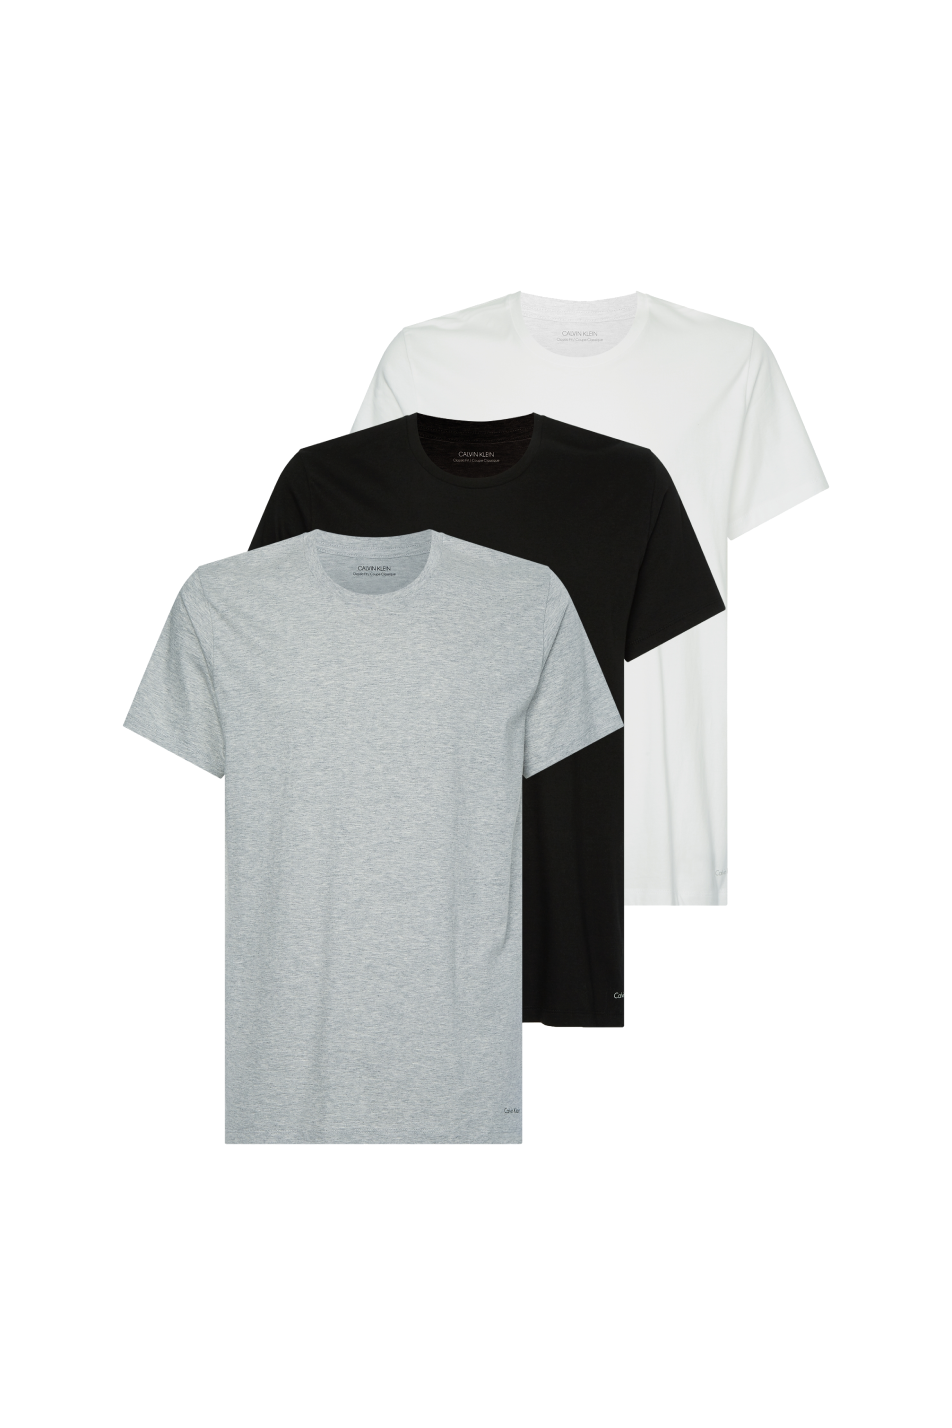 Calvin Klein Men's Crew Neck T-Shirt 3 Pack